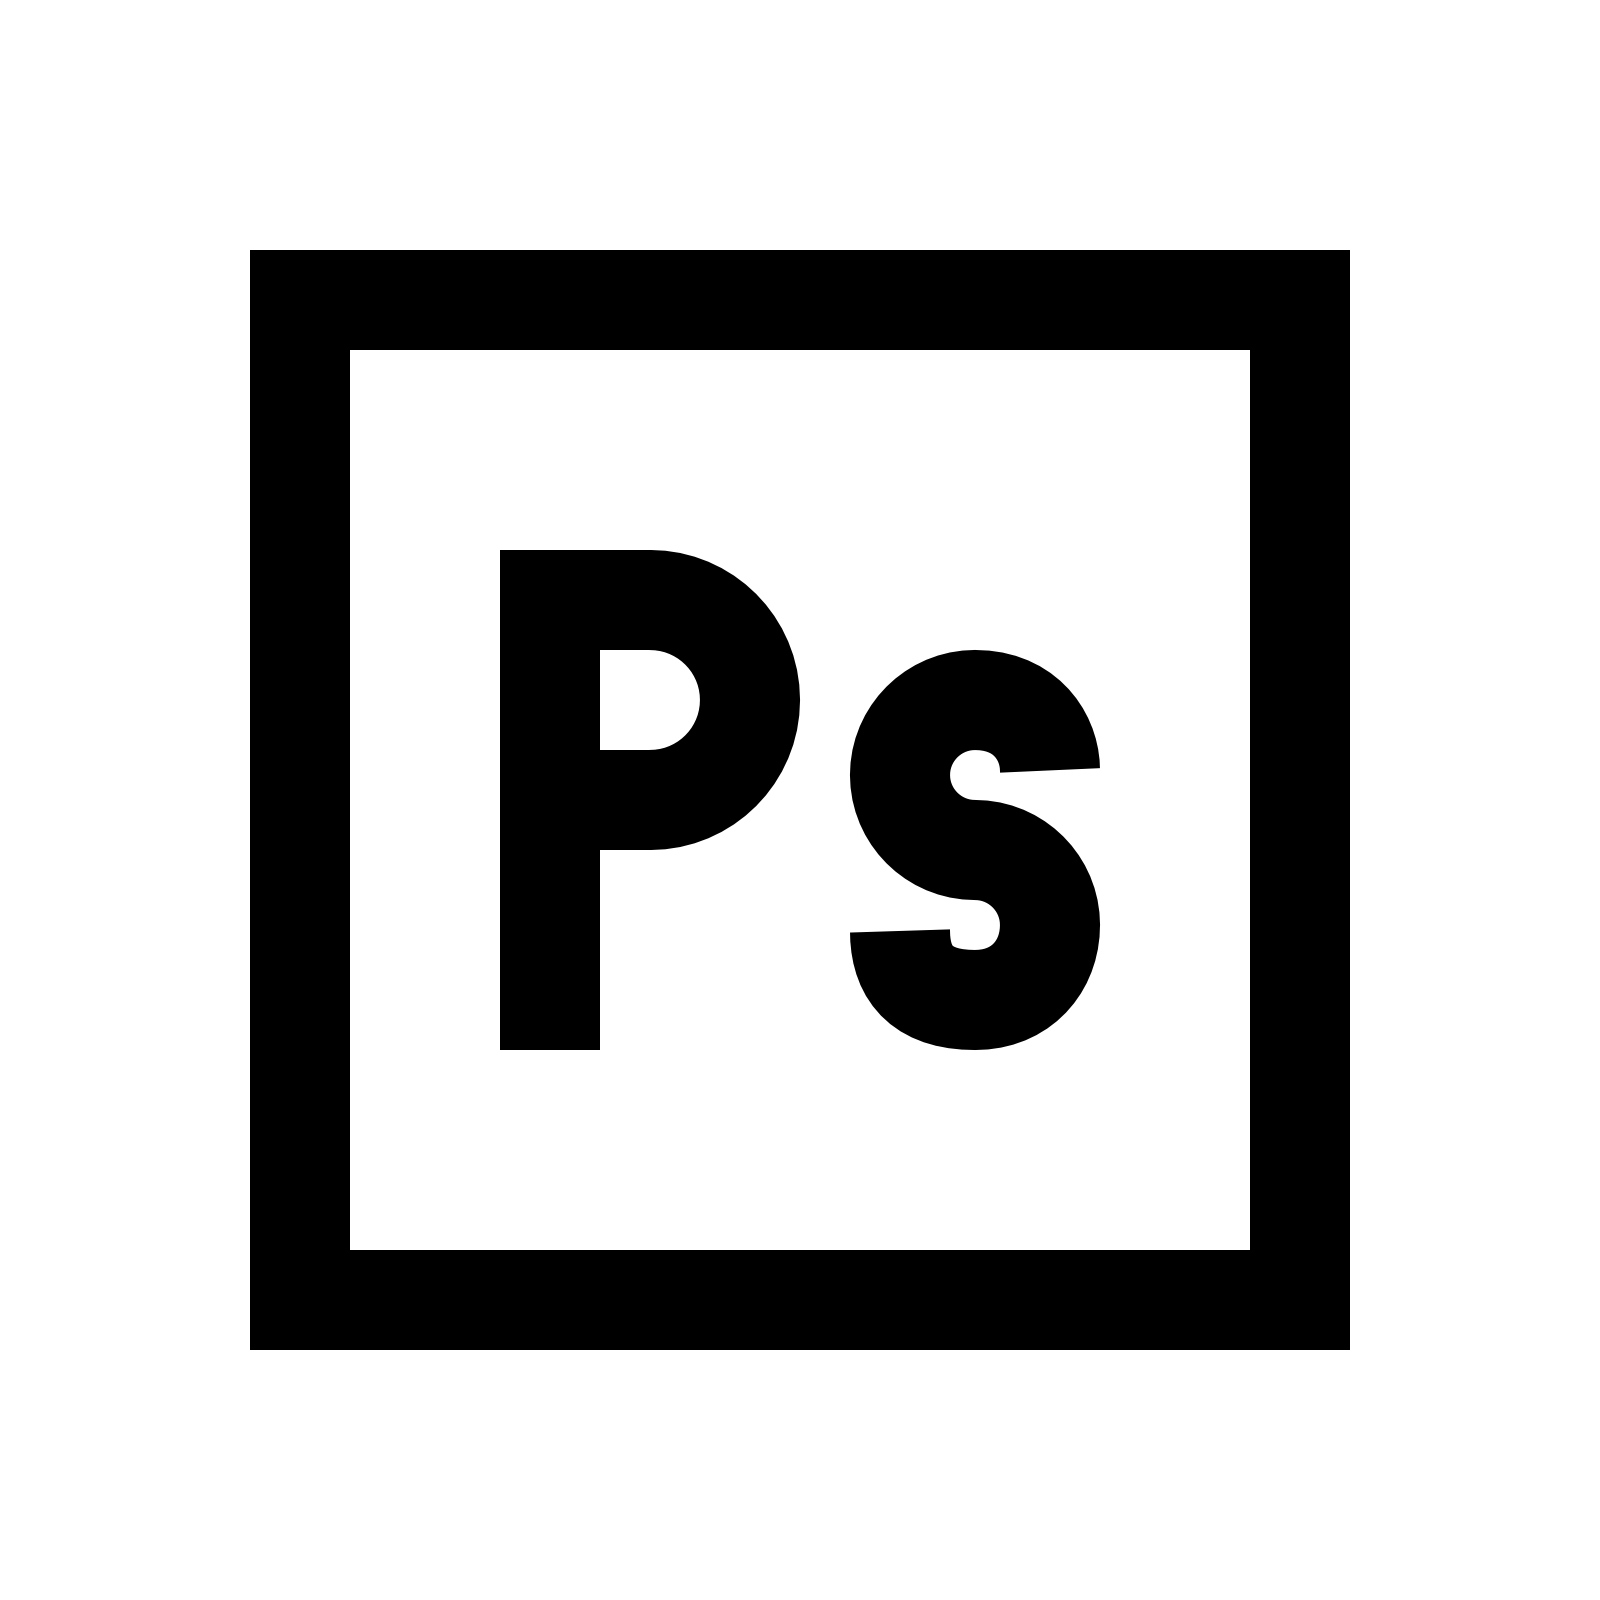 White Logo PNG Transparent Images Free Download